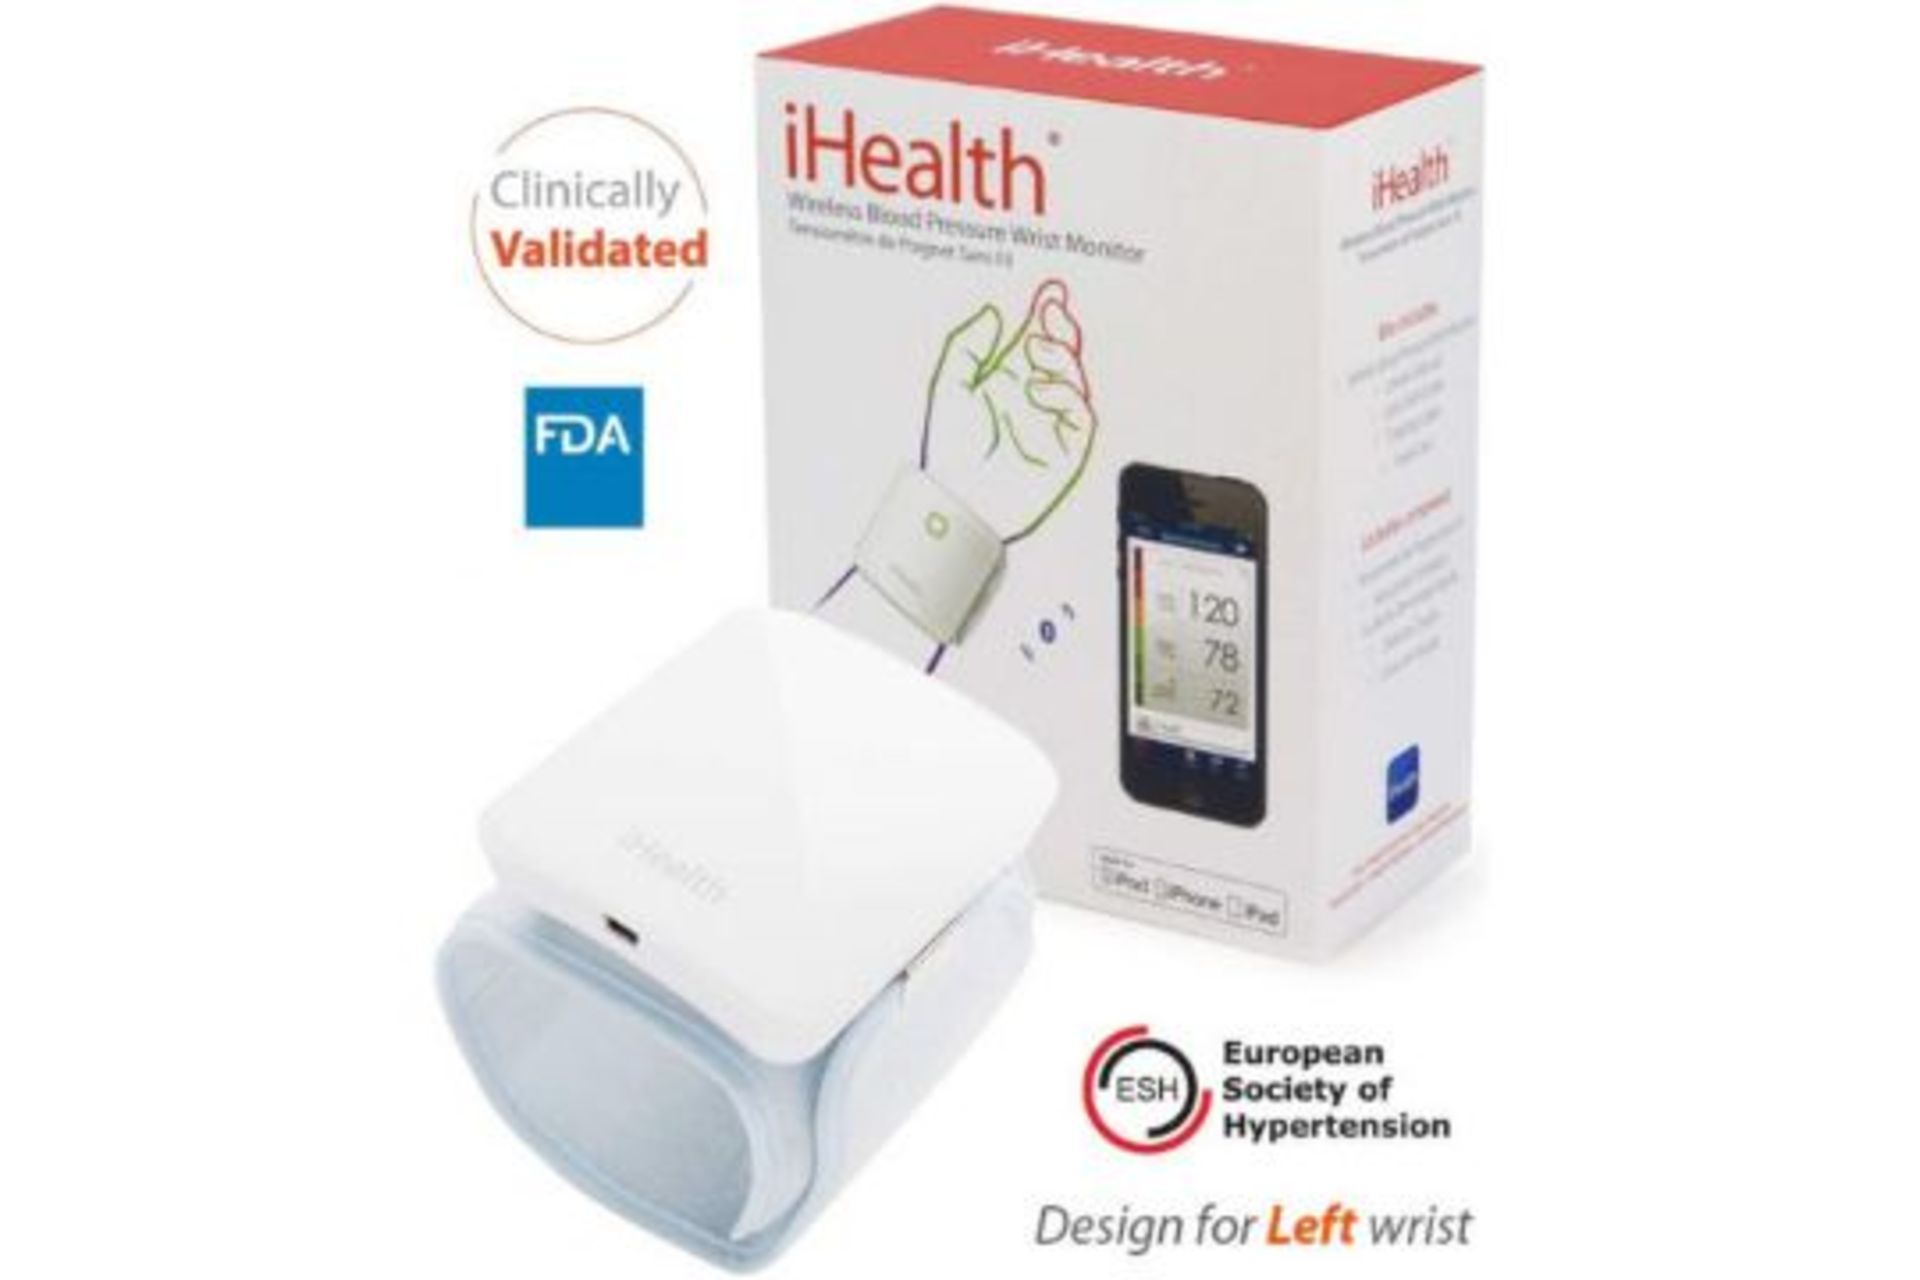 3 x NEW & BOXED iHealth Smart Wrist Blood Pressure Monitor with Display, White. iHealth designs